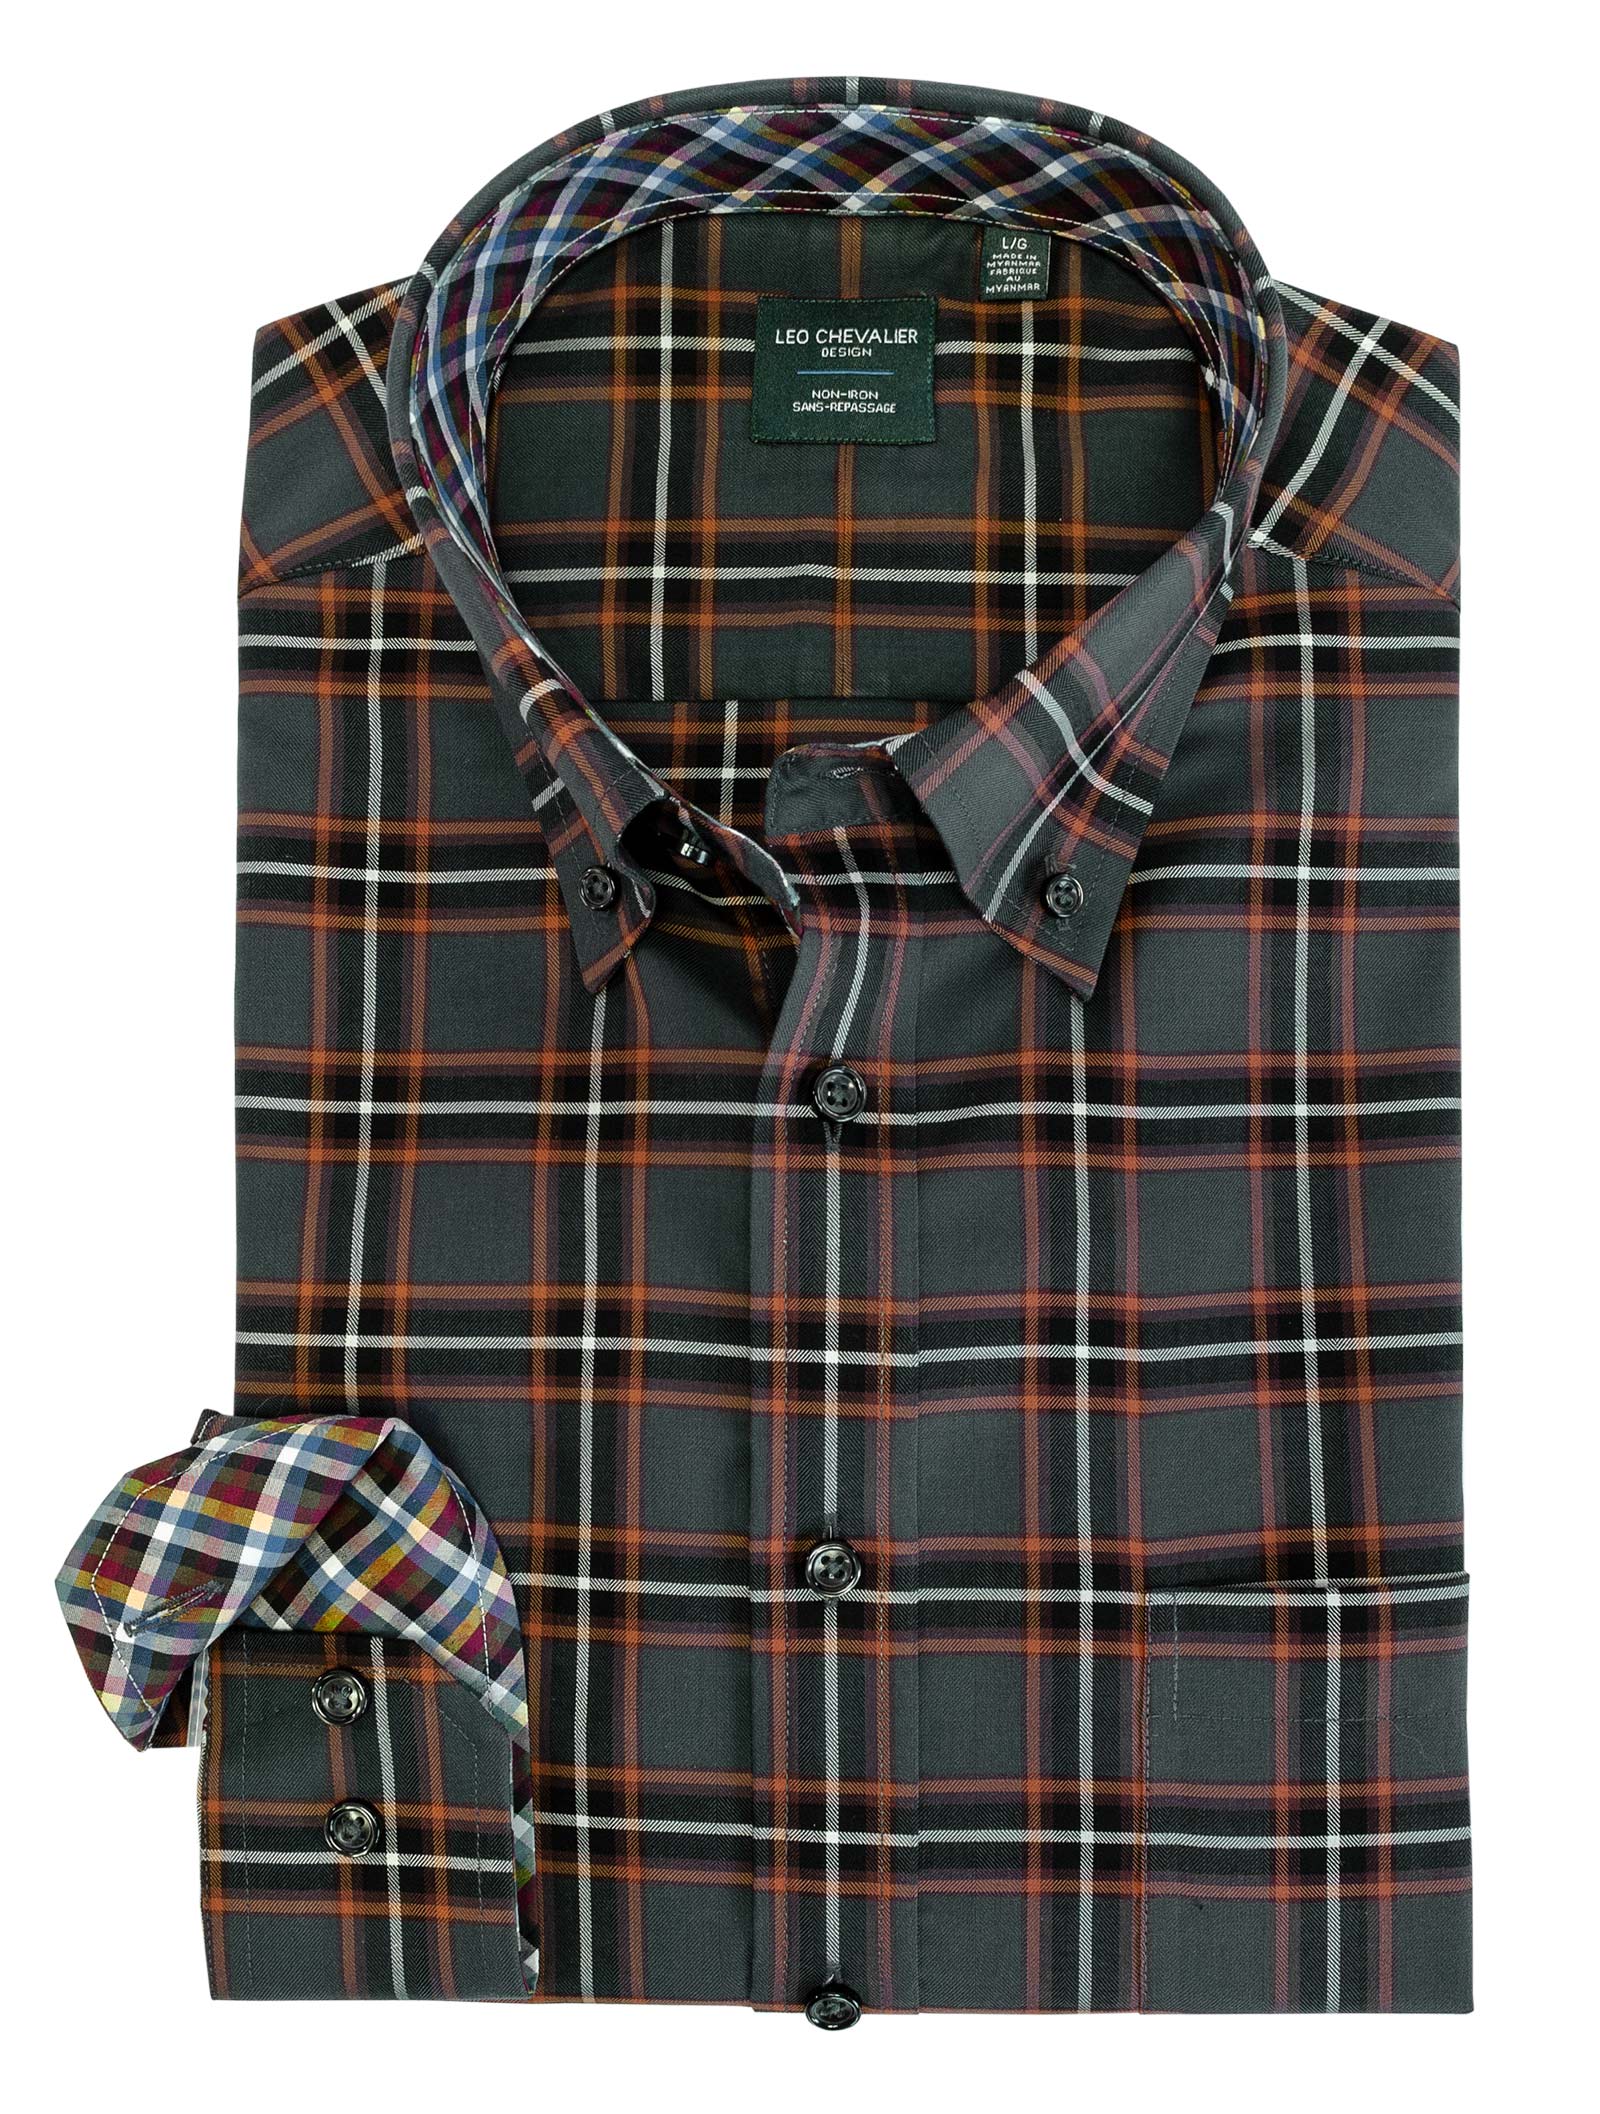 Leo Chevalier Design-L Sale Leo Chevalier Rust Long Sleeve Cotton Button Down Collar Sport Shirts